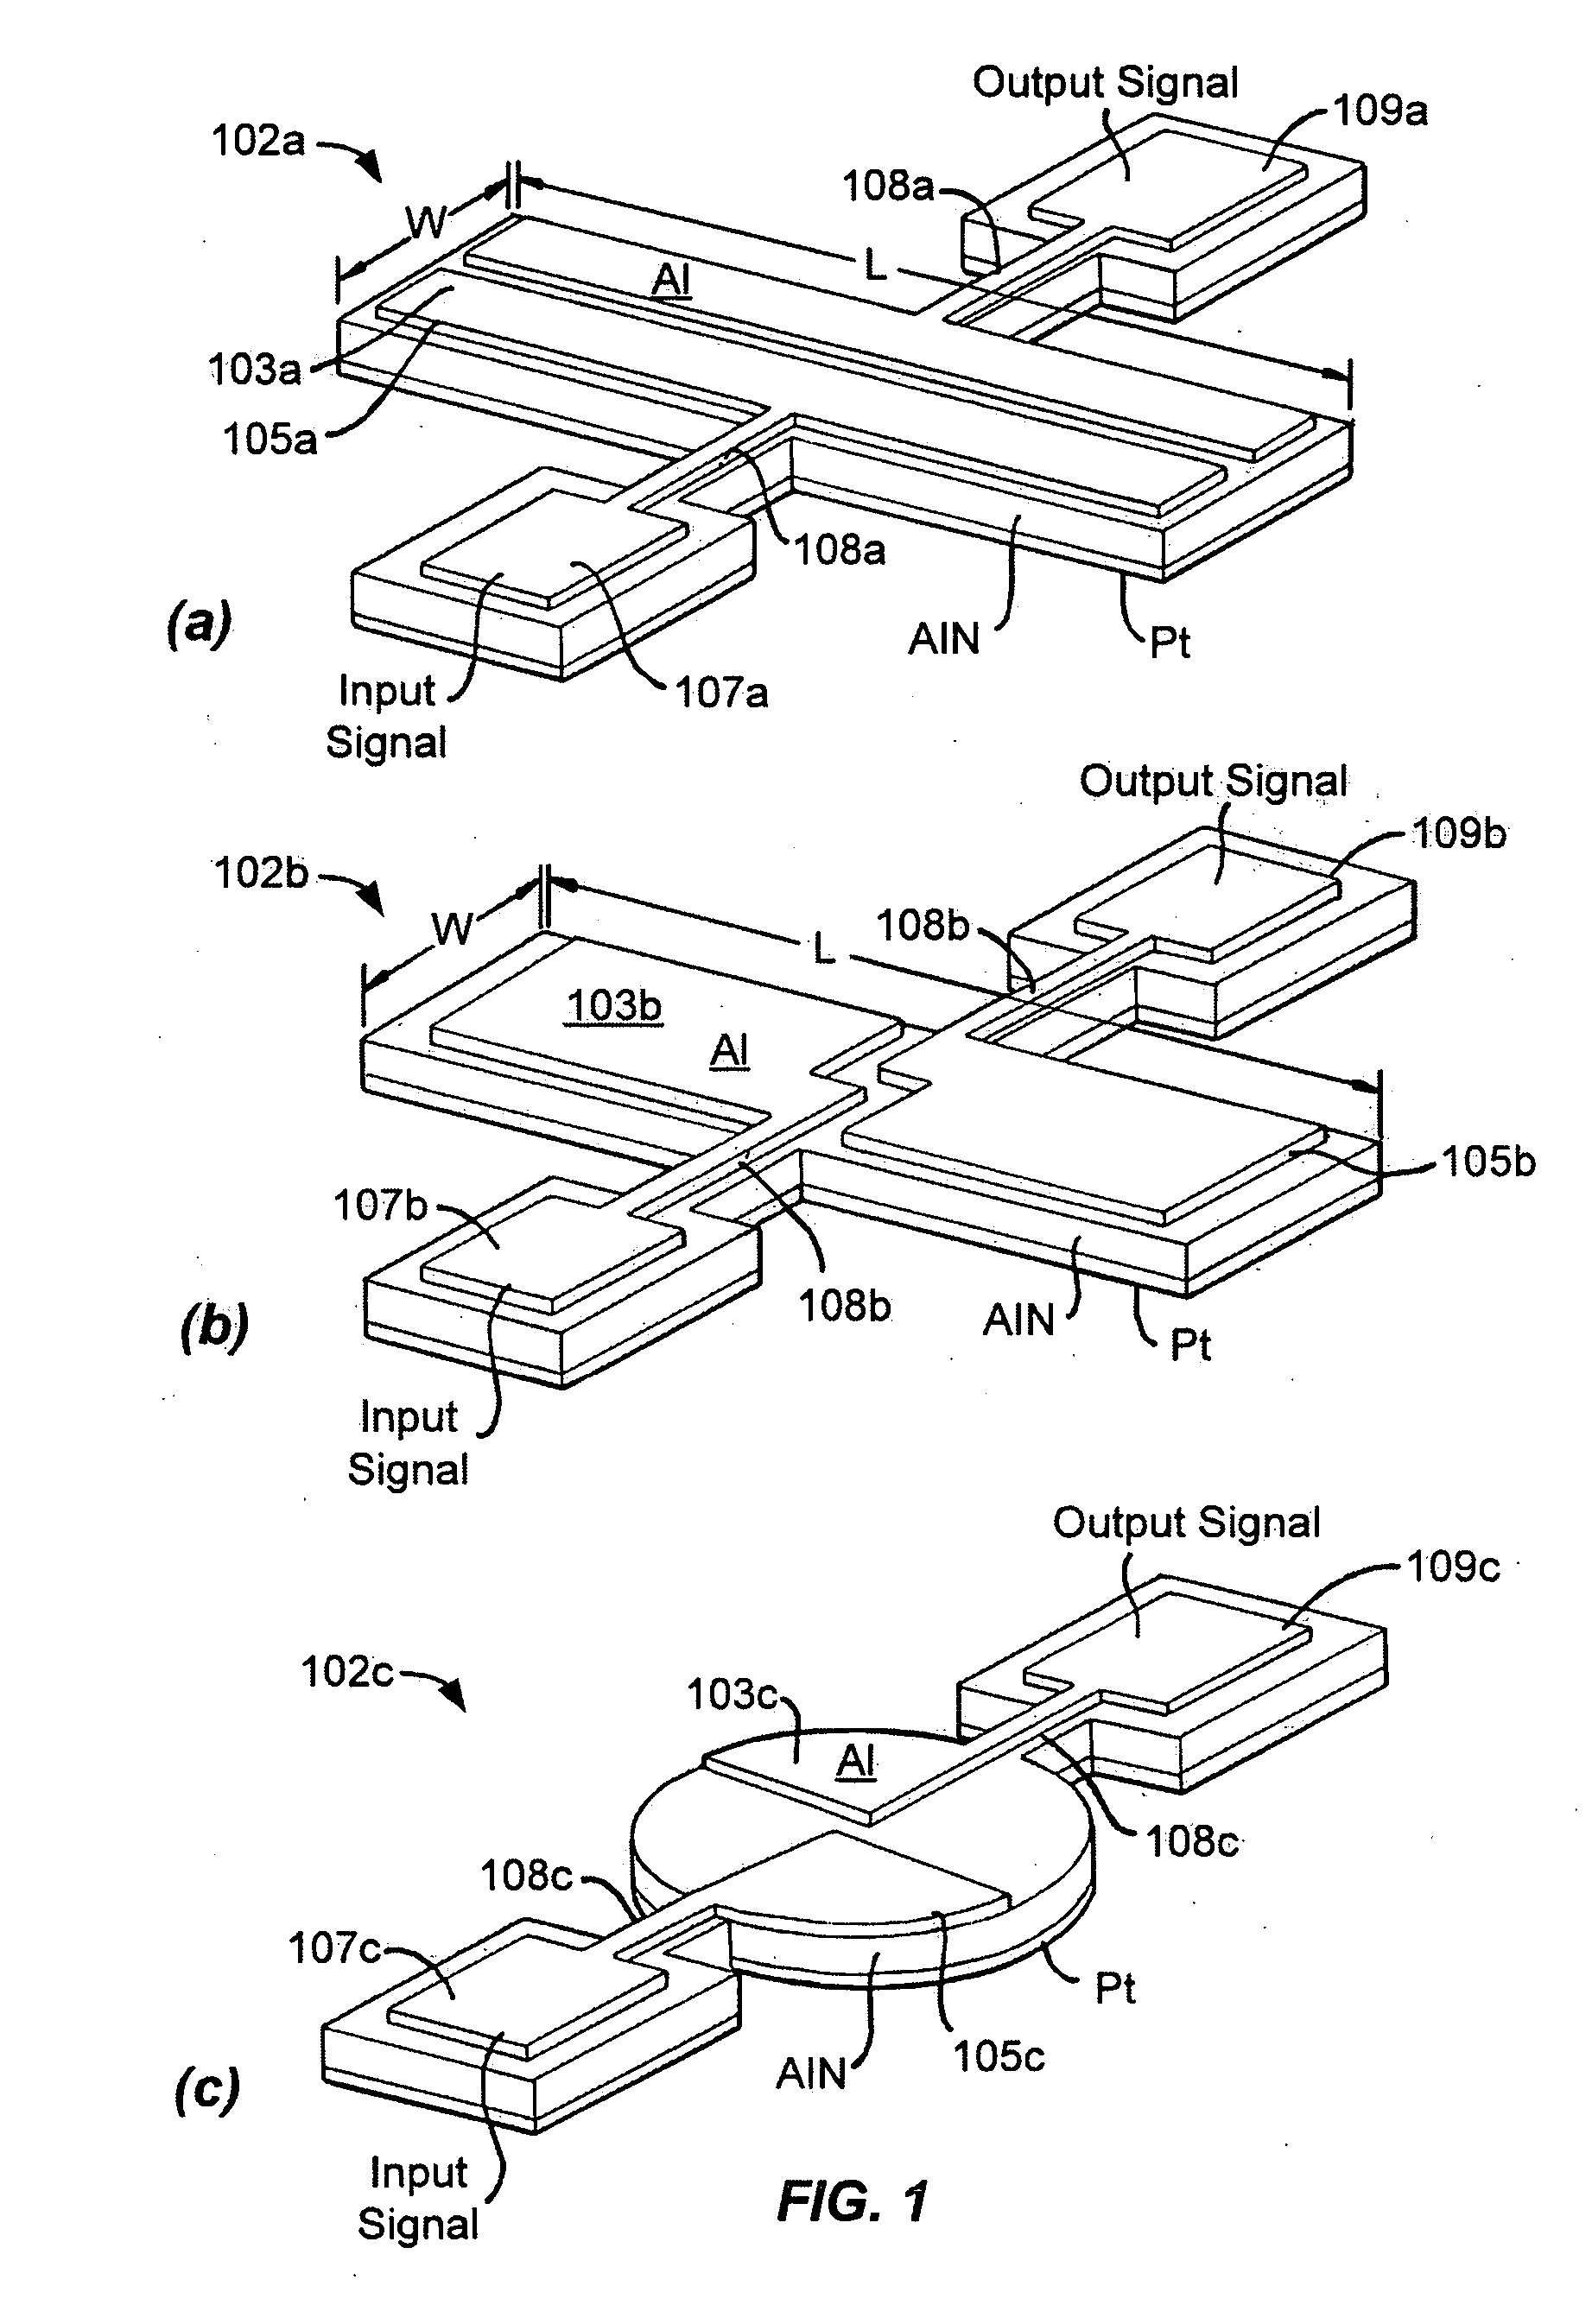 Contour-mode piezoelectric micromechanical resonators